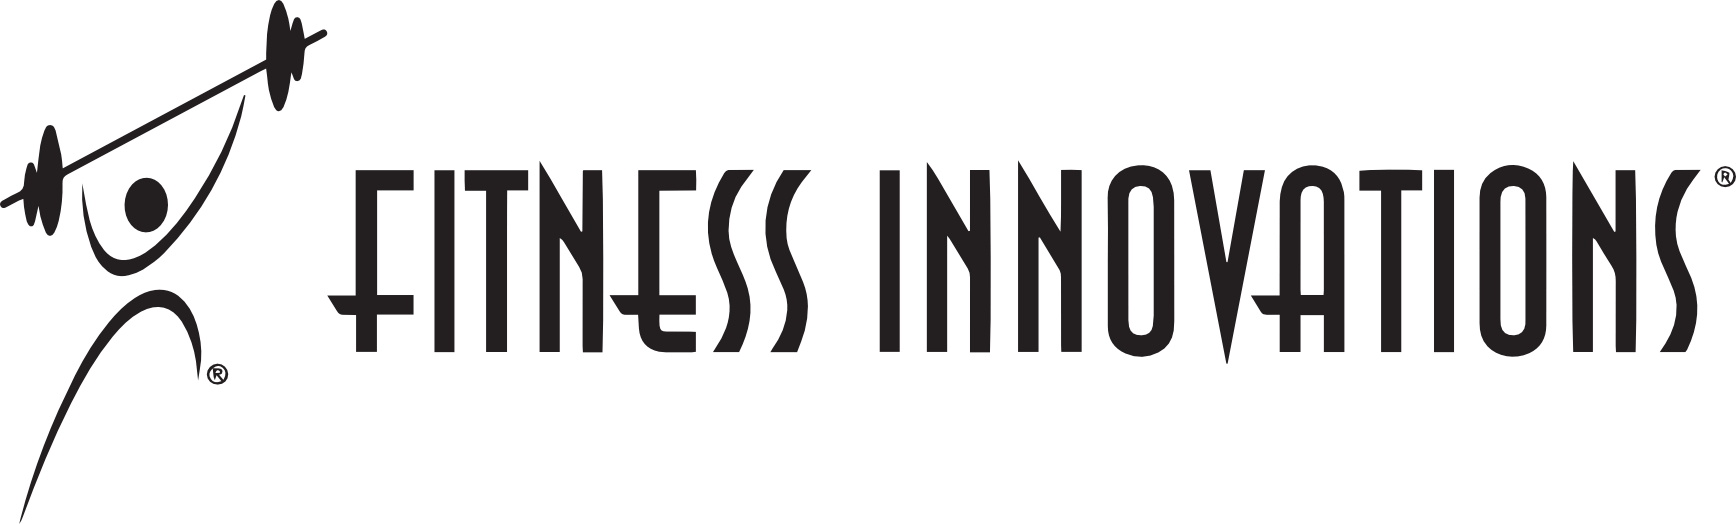 Fitness Innovations Logo - Horizontal